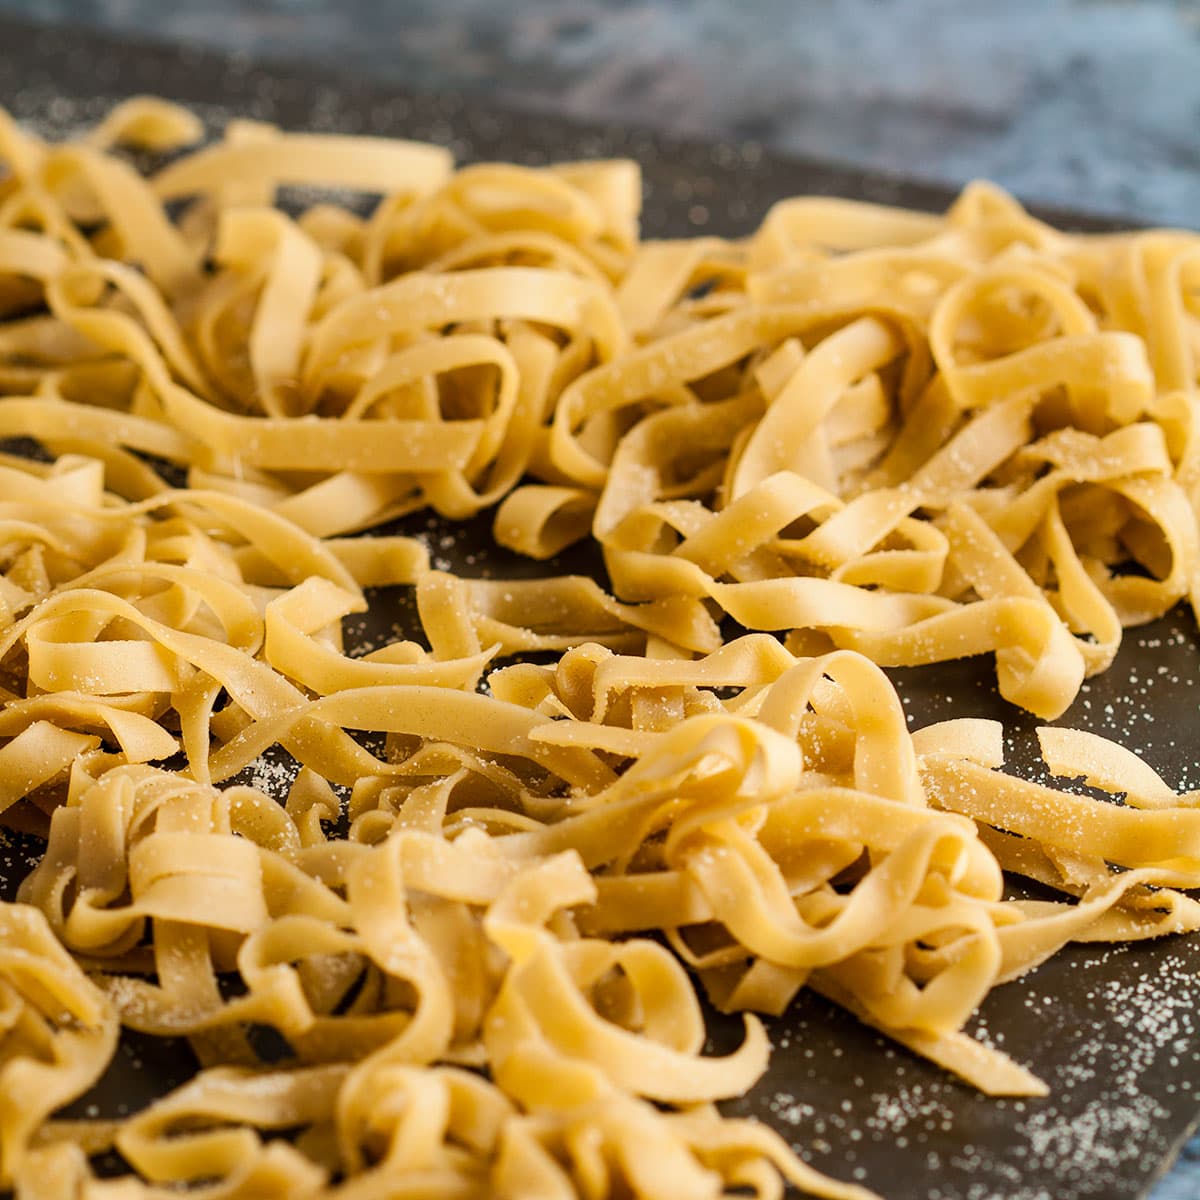 homemade tagliatelle pasta on a tray.